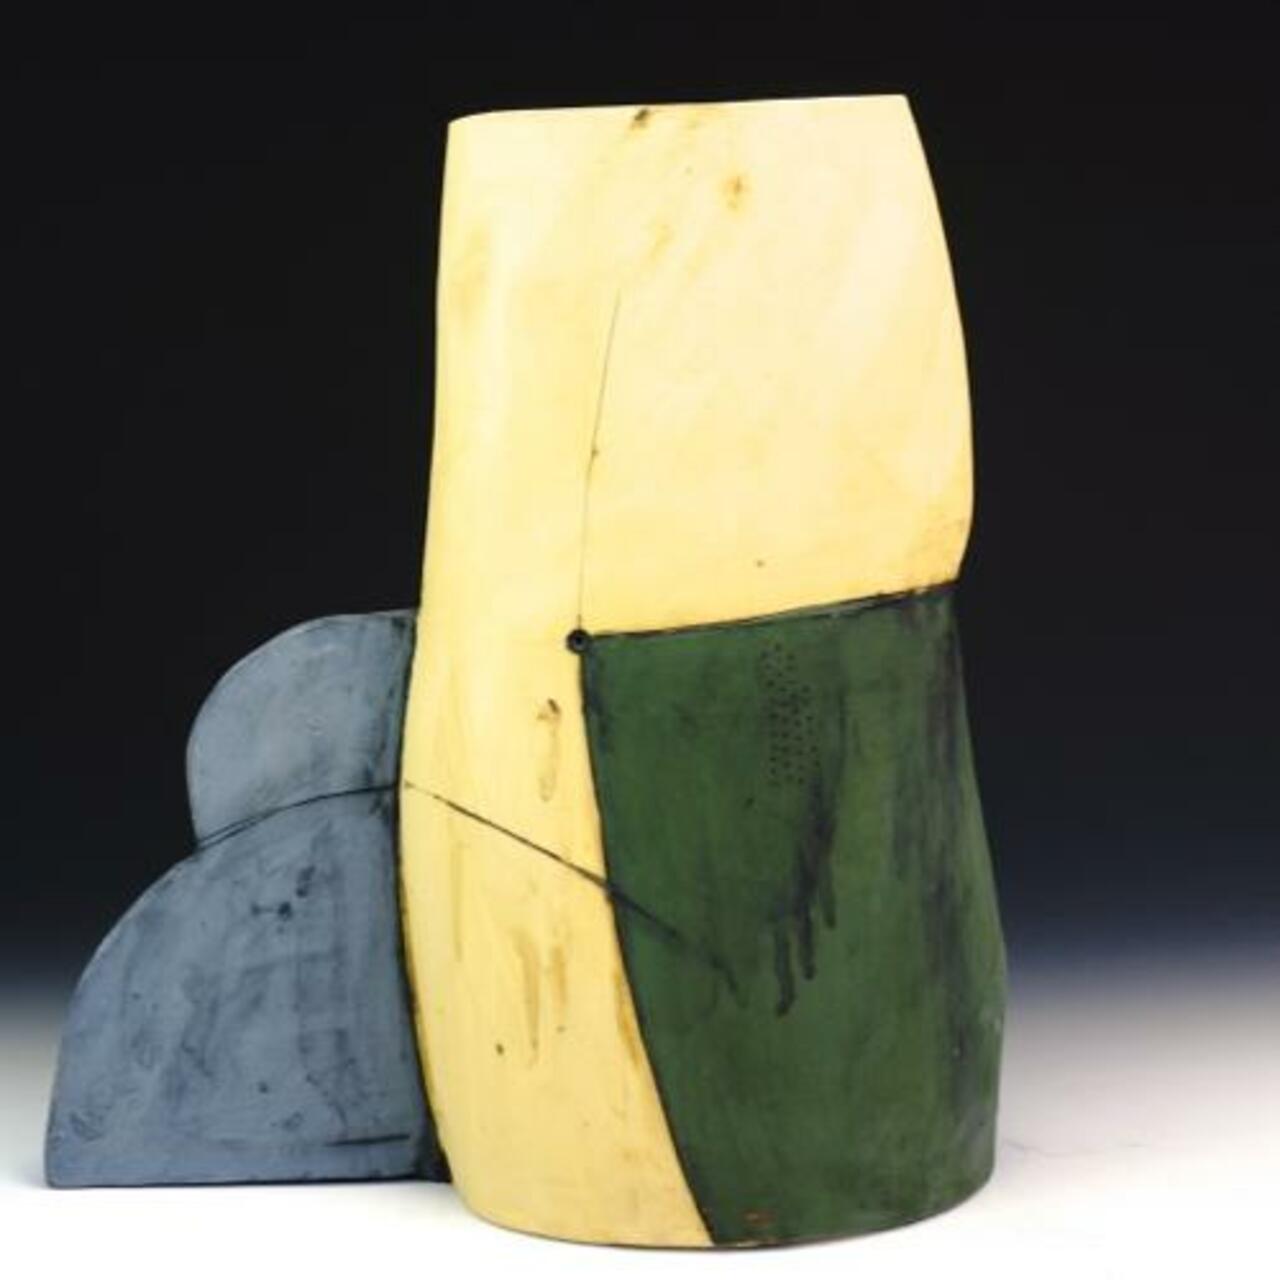 #RobPulleyn's work is Colorful and Fun
http://www.crimsonlaurelgallery.com/Artist.cfm 
#ceramics #art #pottery #clay http://t.co/cskC74uisa